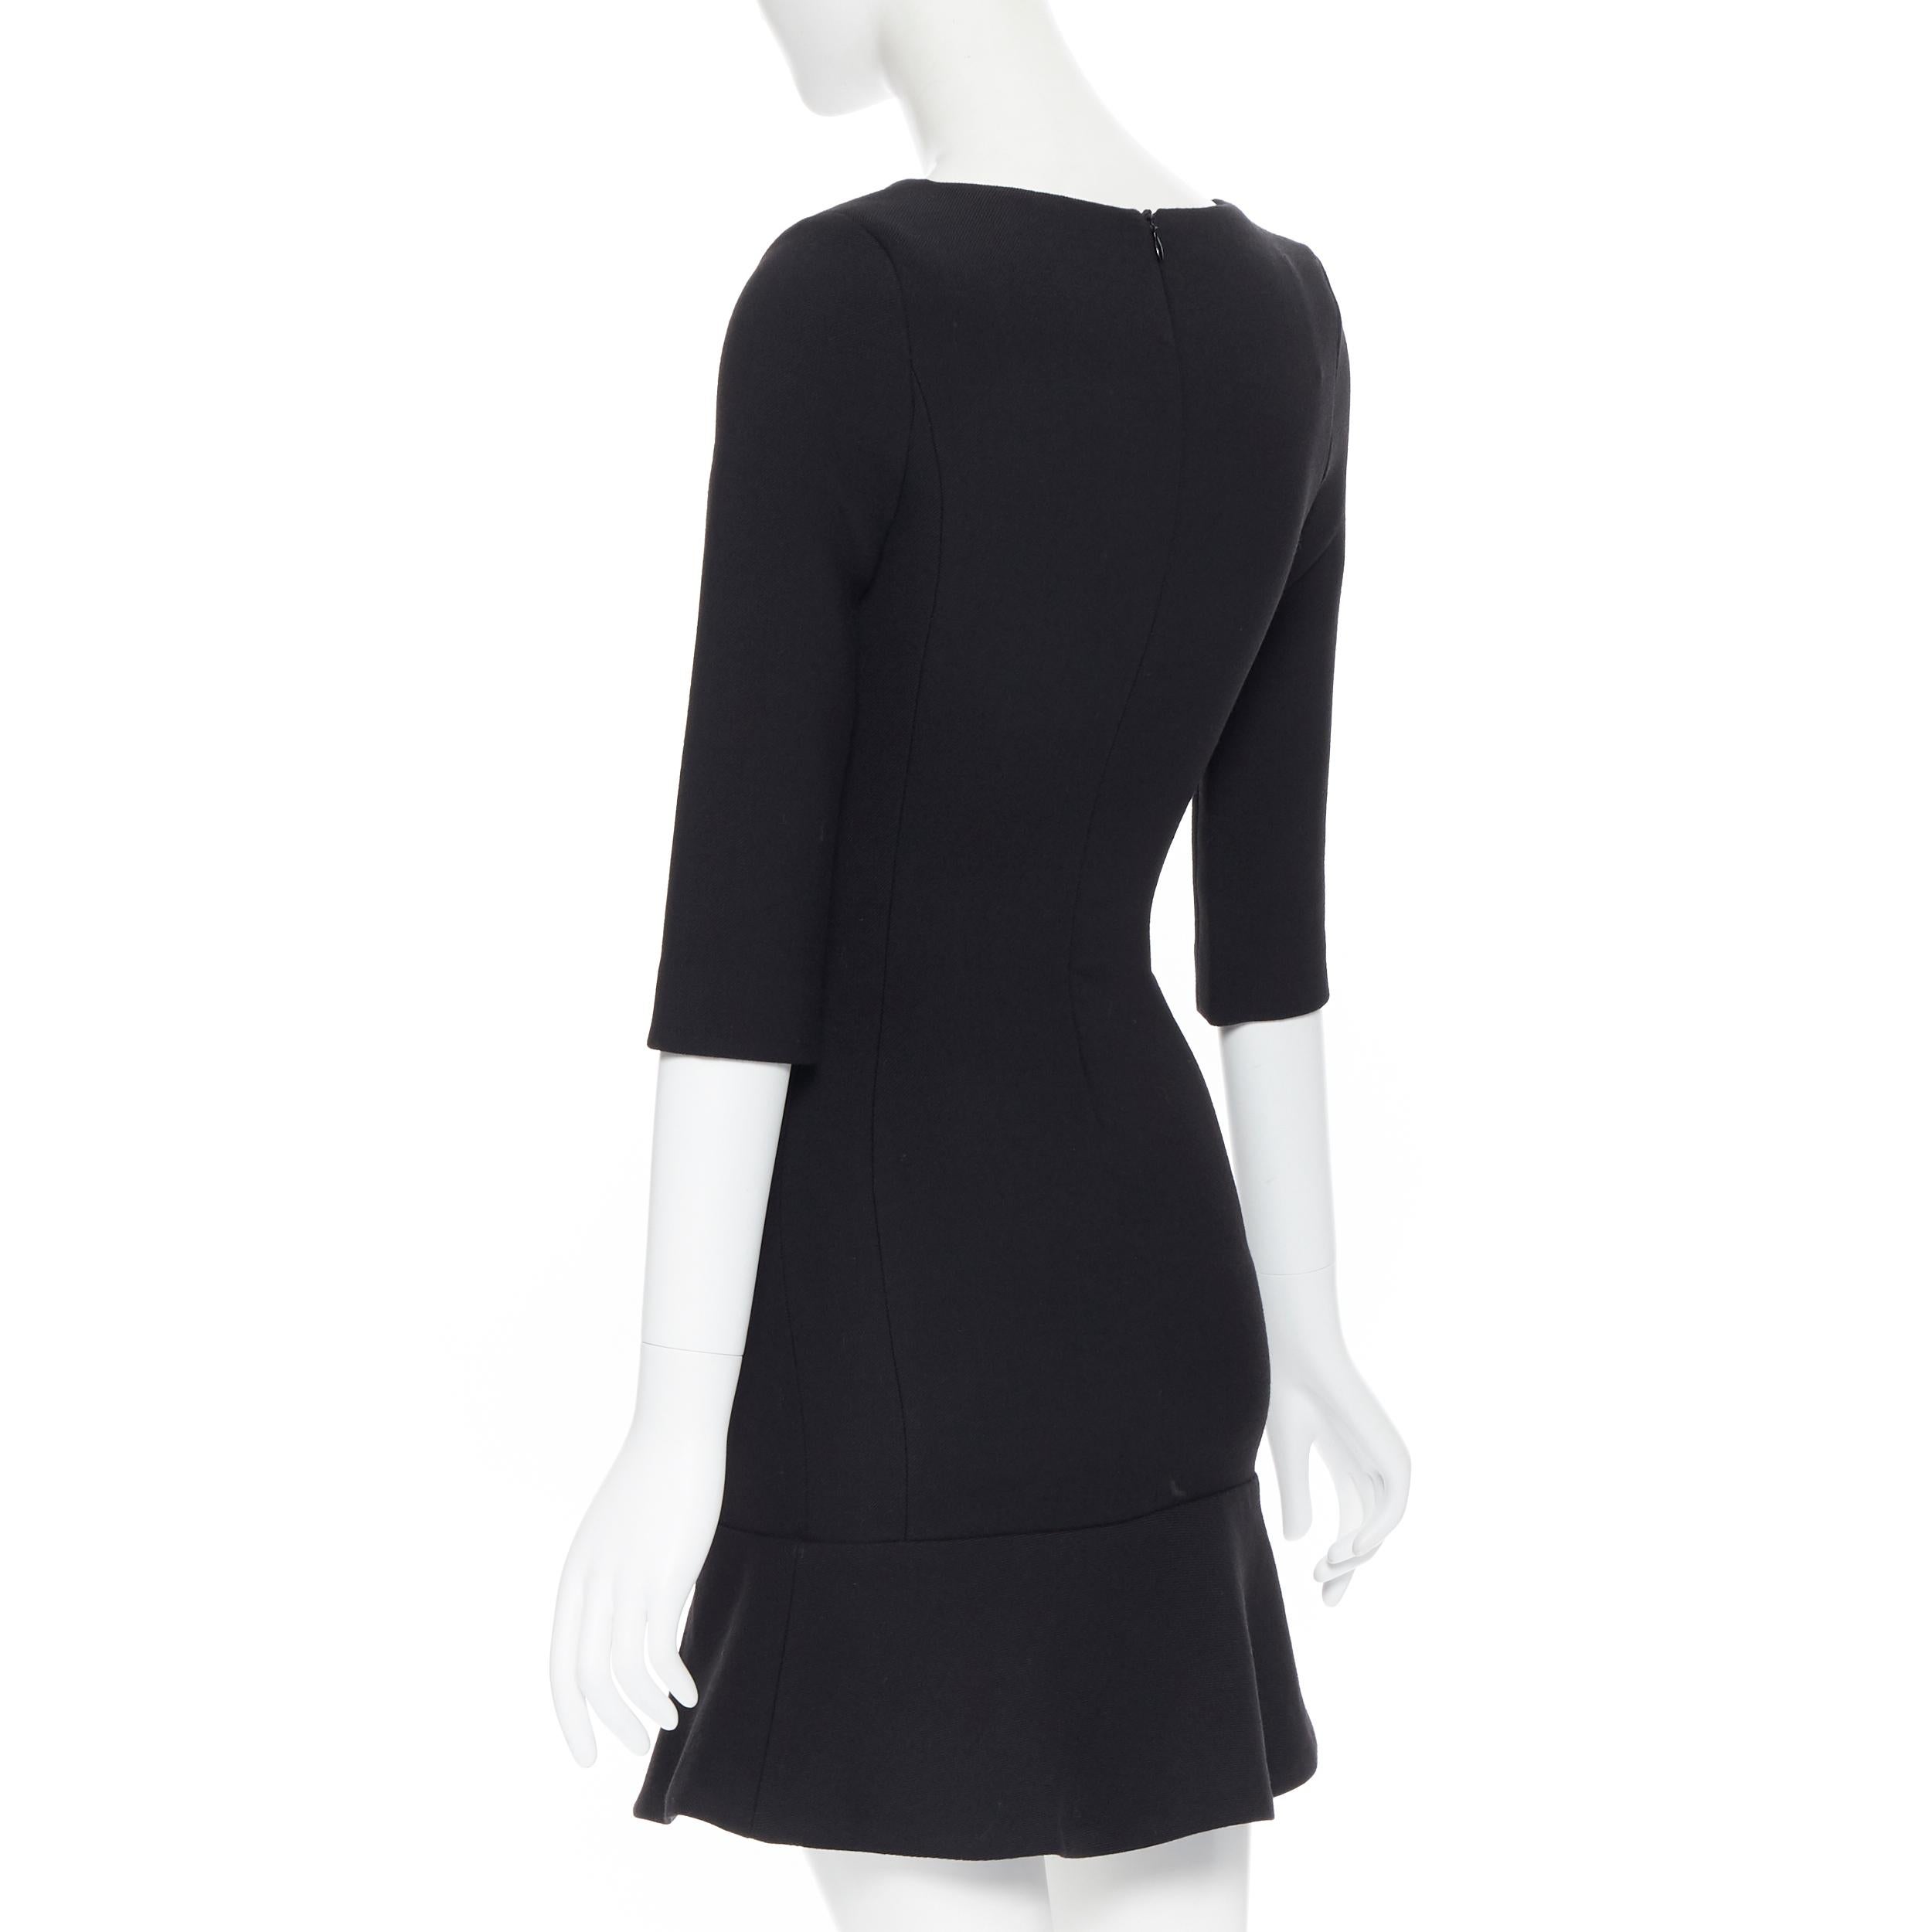 JAY AHR black wool blend stretch flute flared skirt 3/4 sleeve cocktail dress XS 1